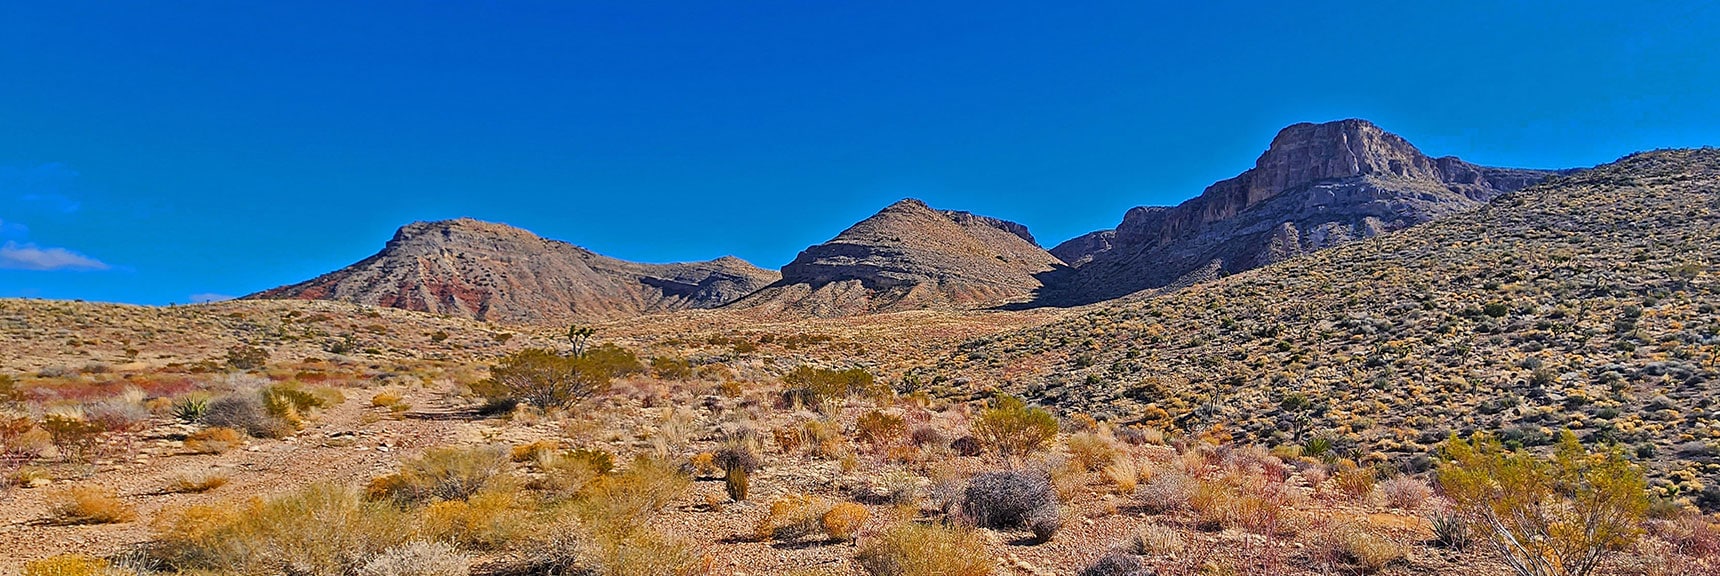 Final 2 Canyons: Chute Canyon to Right, Northwest Canyon to Left. | Landmark Bluff Summit | Lovell Canyon, Nevada